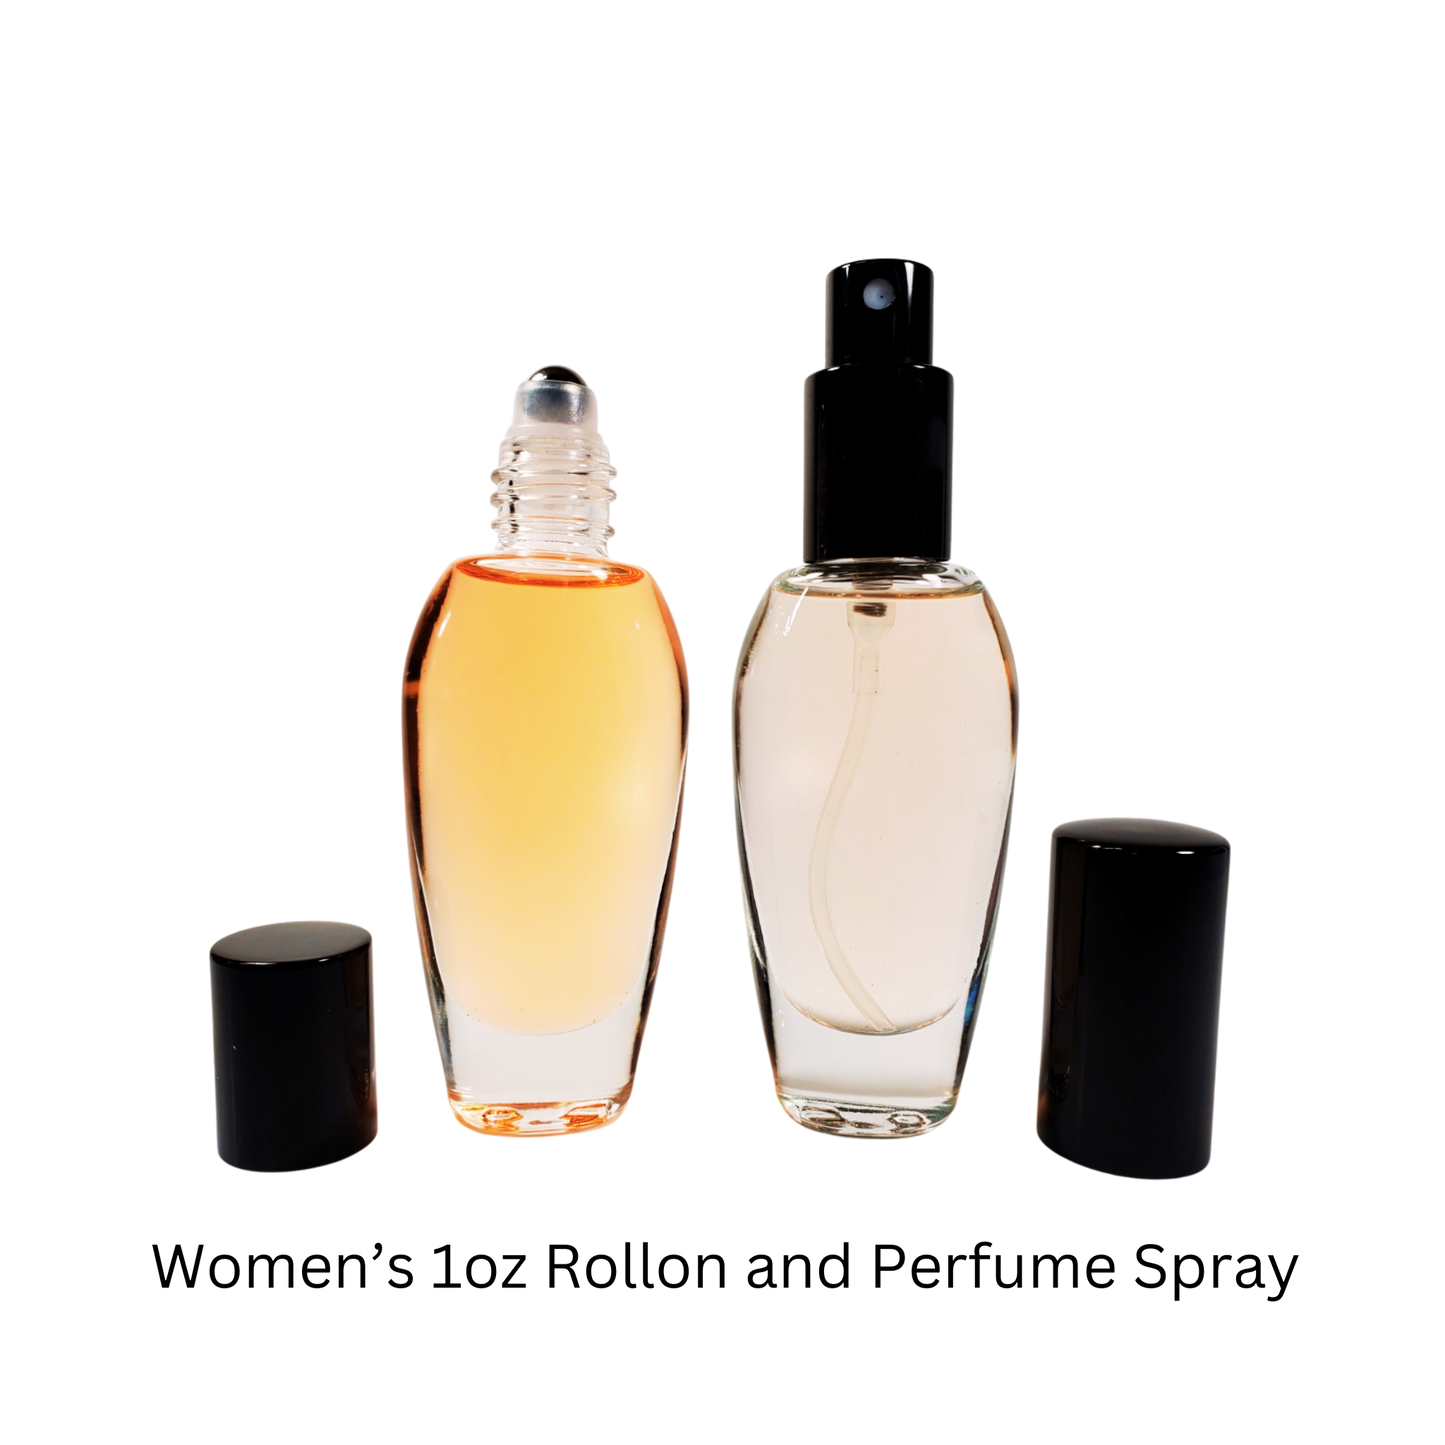 Greenley Type* / Perfume Body Oil / Eau de Parfum